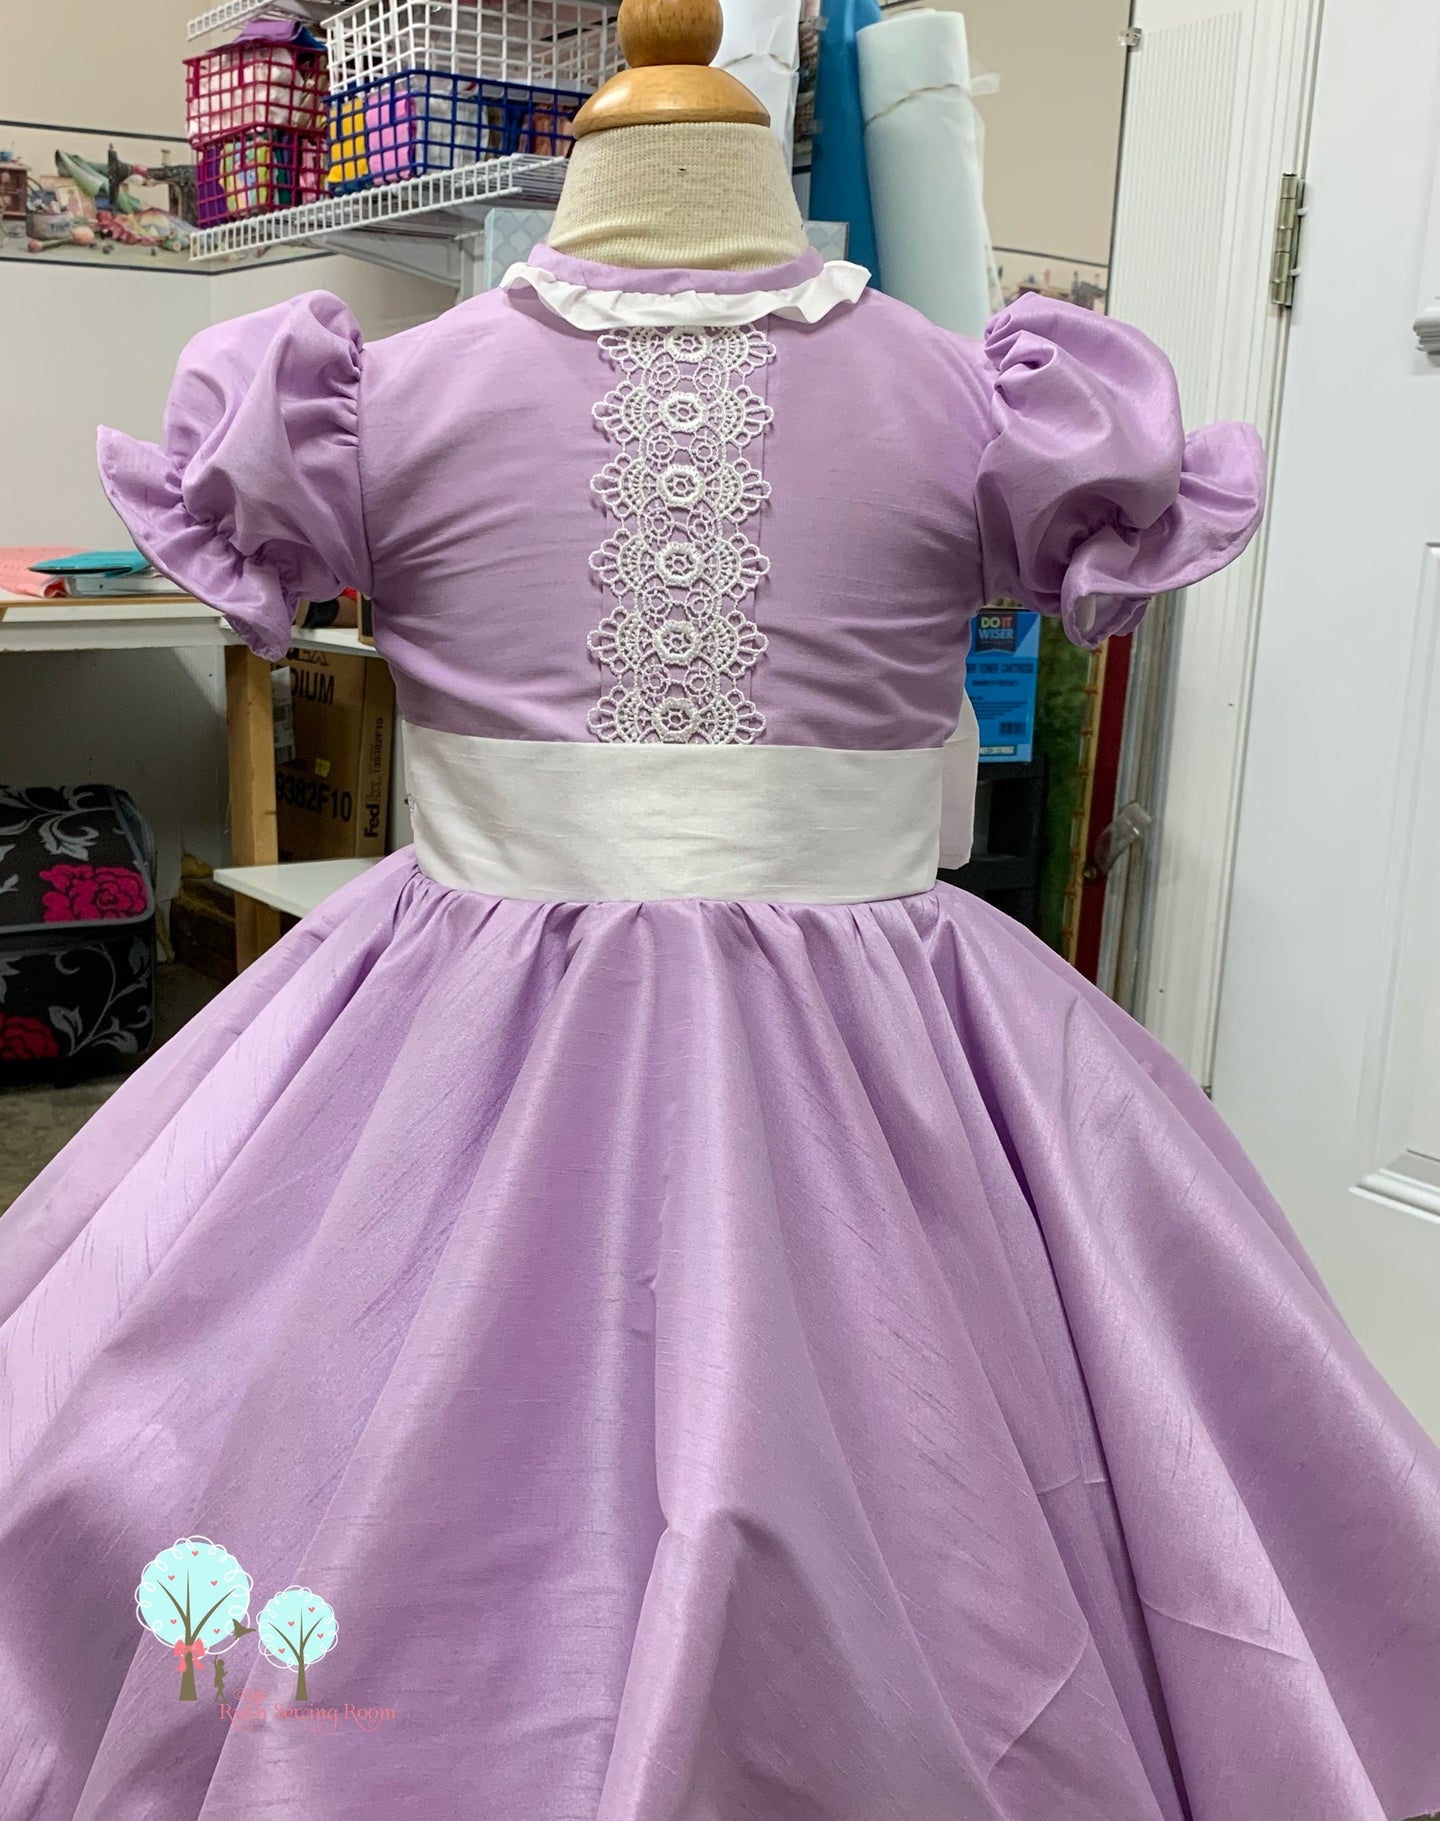 Beauty - Sunday Best - Poly Silk Dupioni Lilac - Wedding Flower Girl - Easter - Tea Party Dress - Birthday Party Dress - Princess